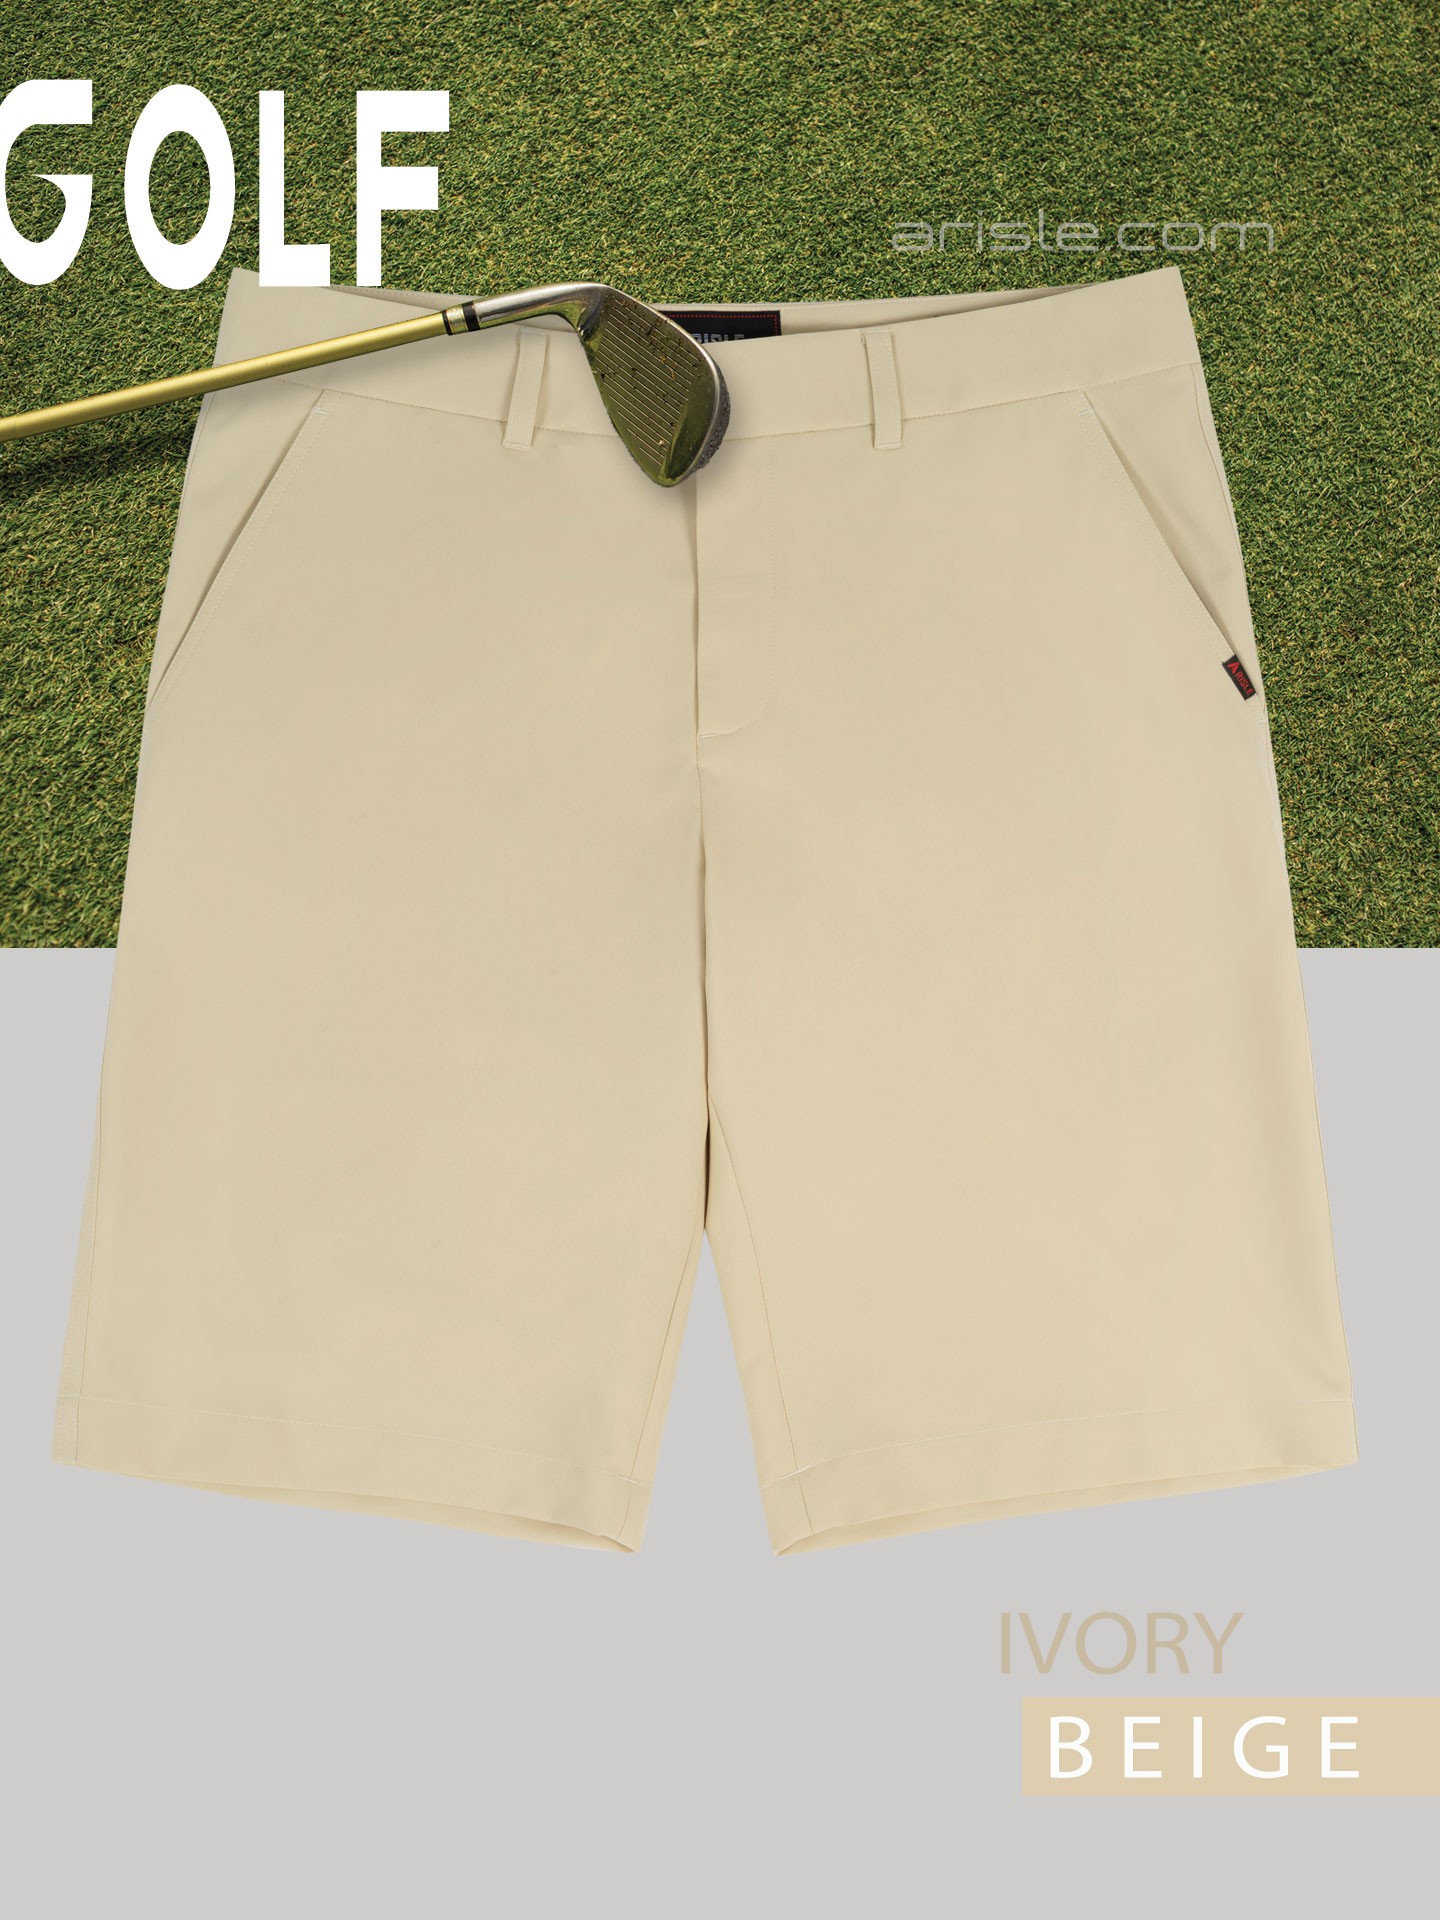 Quần Shorts Golf ARISLE Elite Ivory Beige